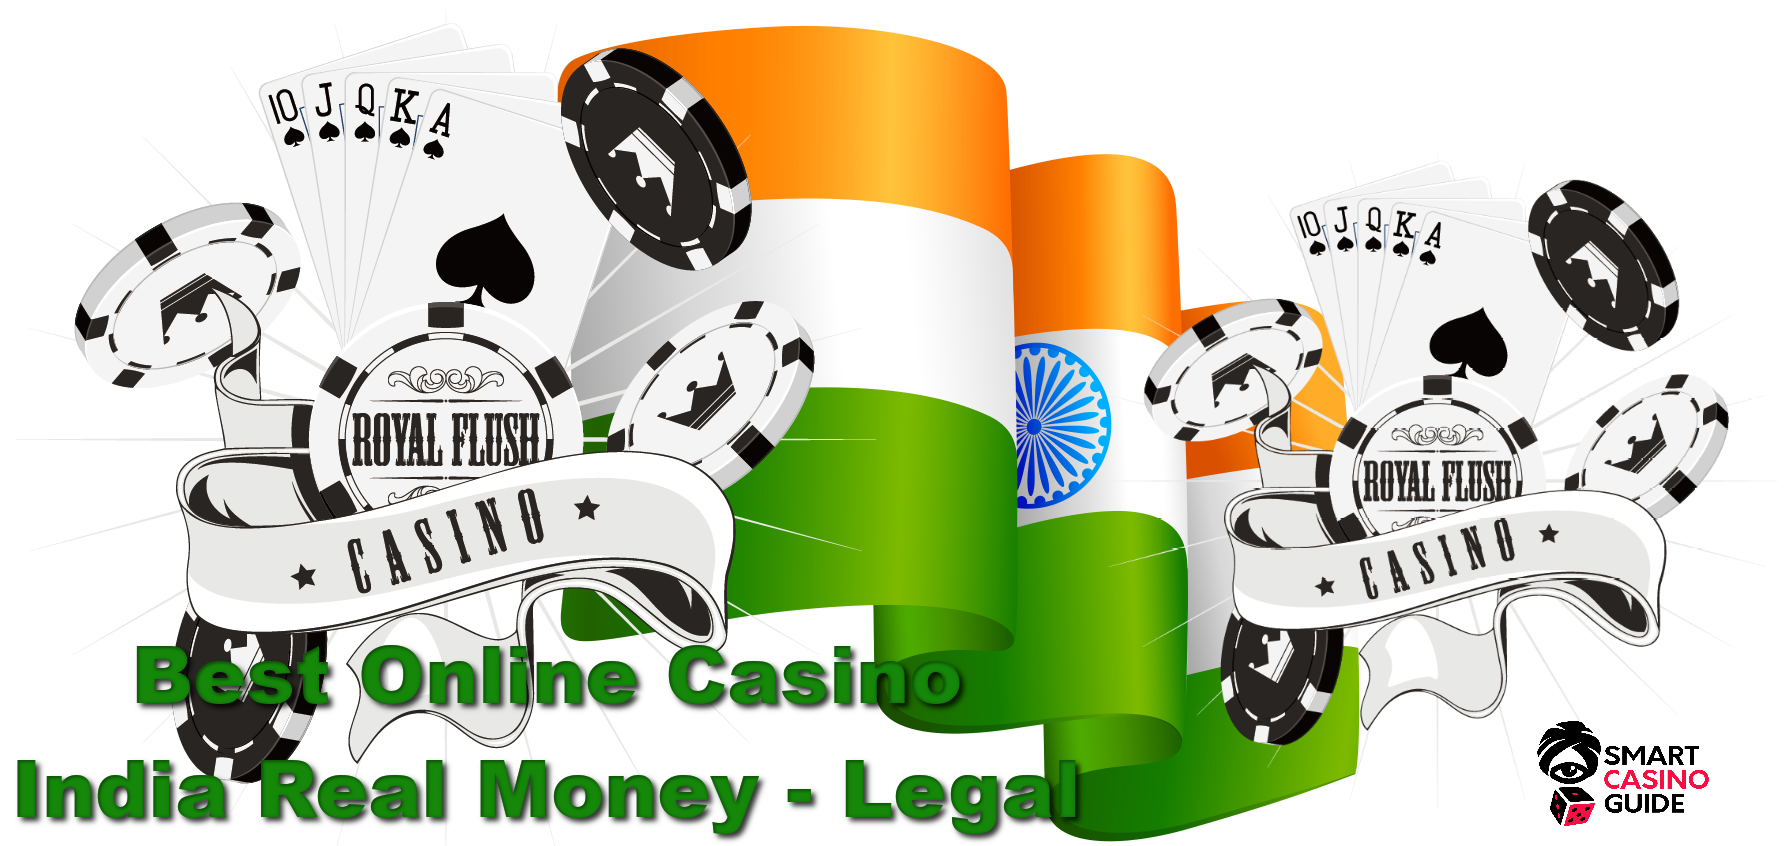 Royal panda online casino india